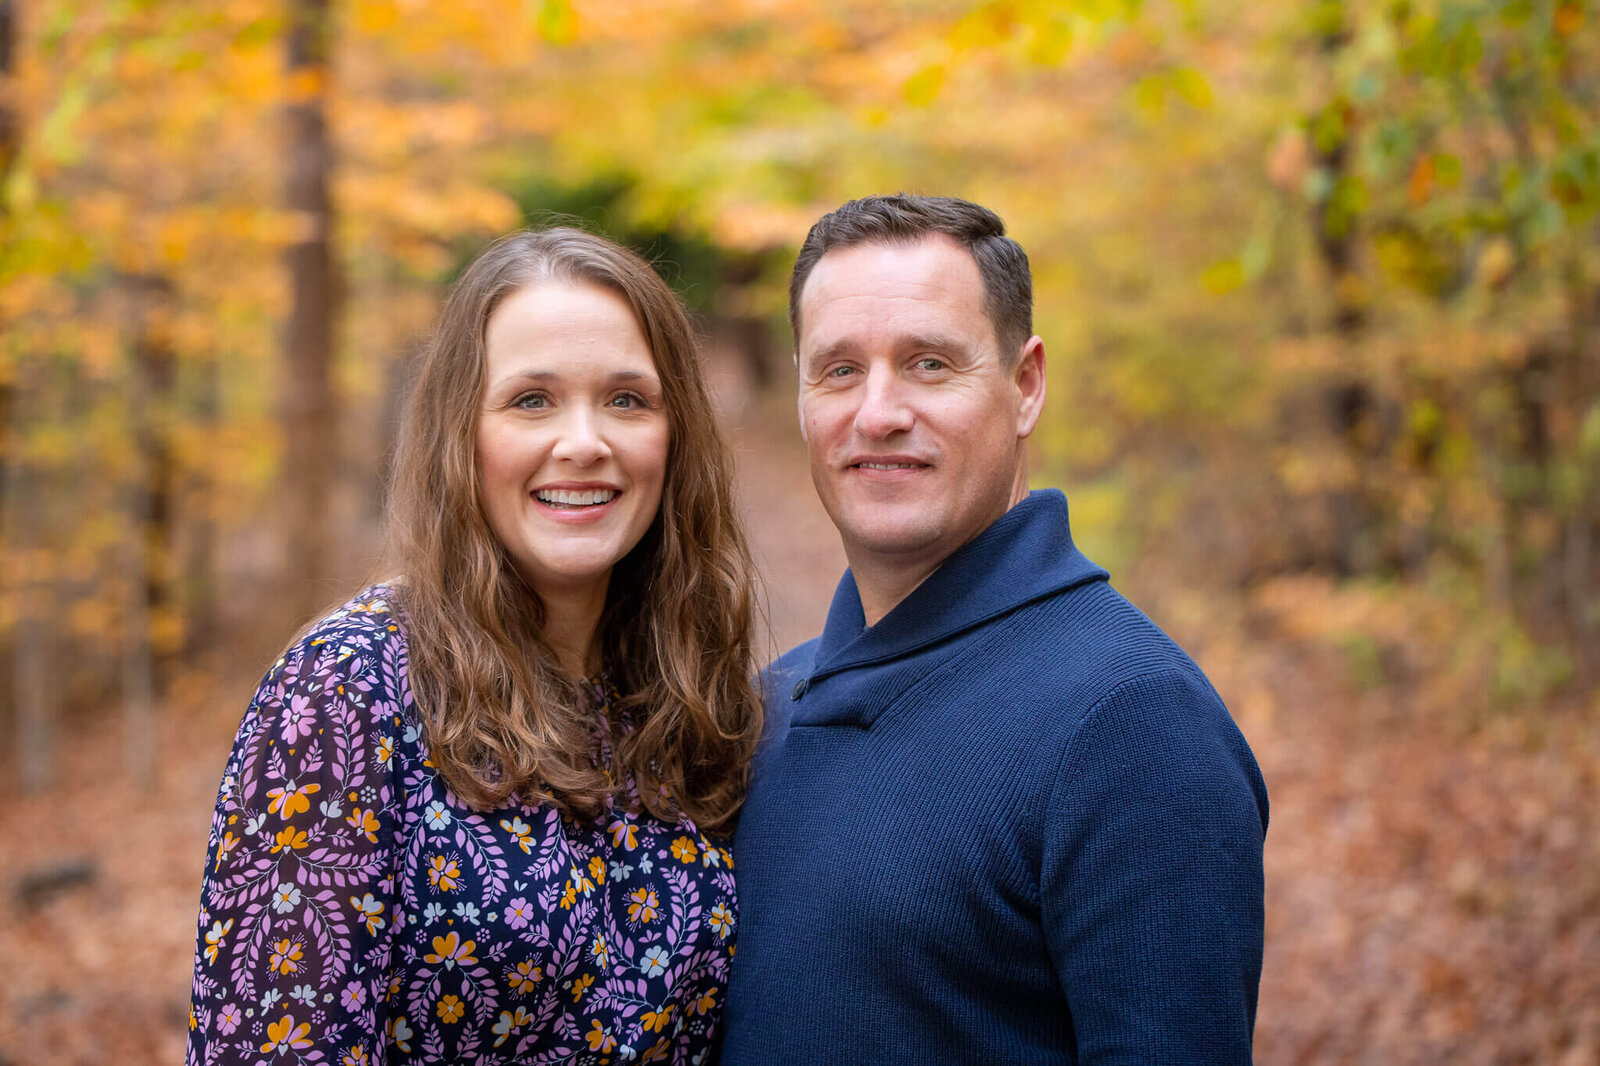 A Springfield couple posing among the fall foliage.